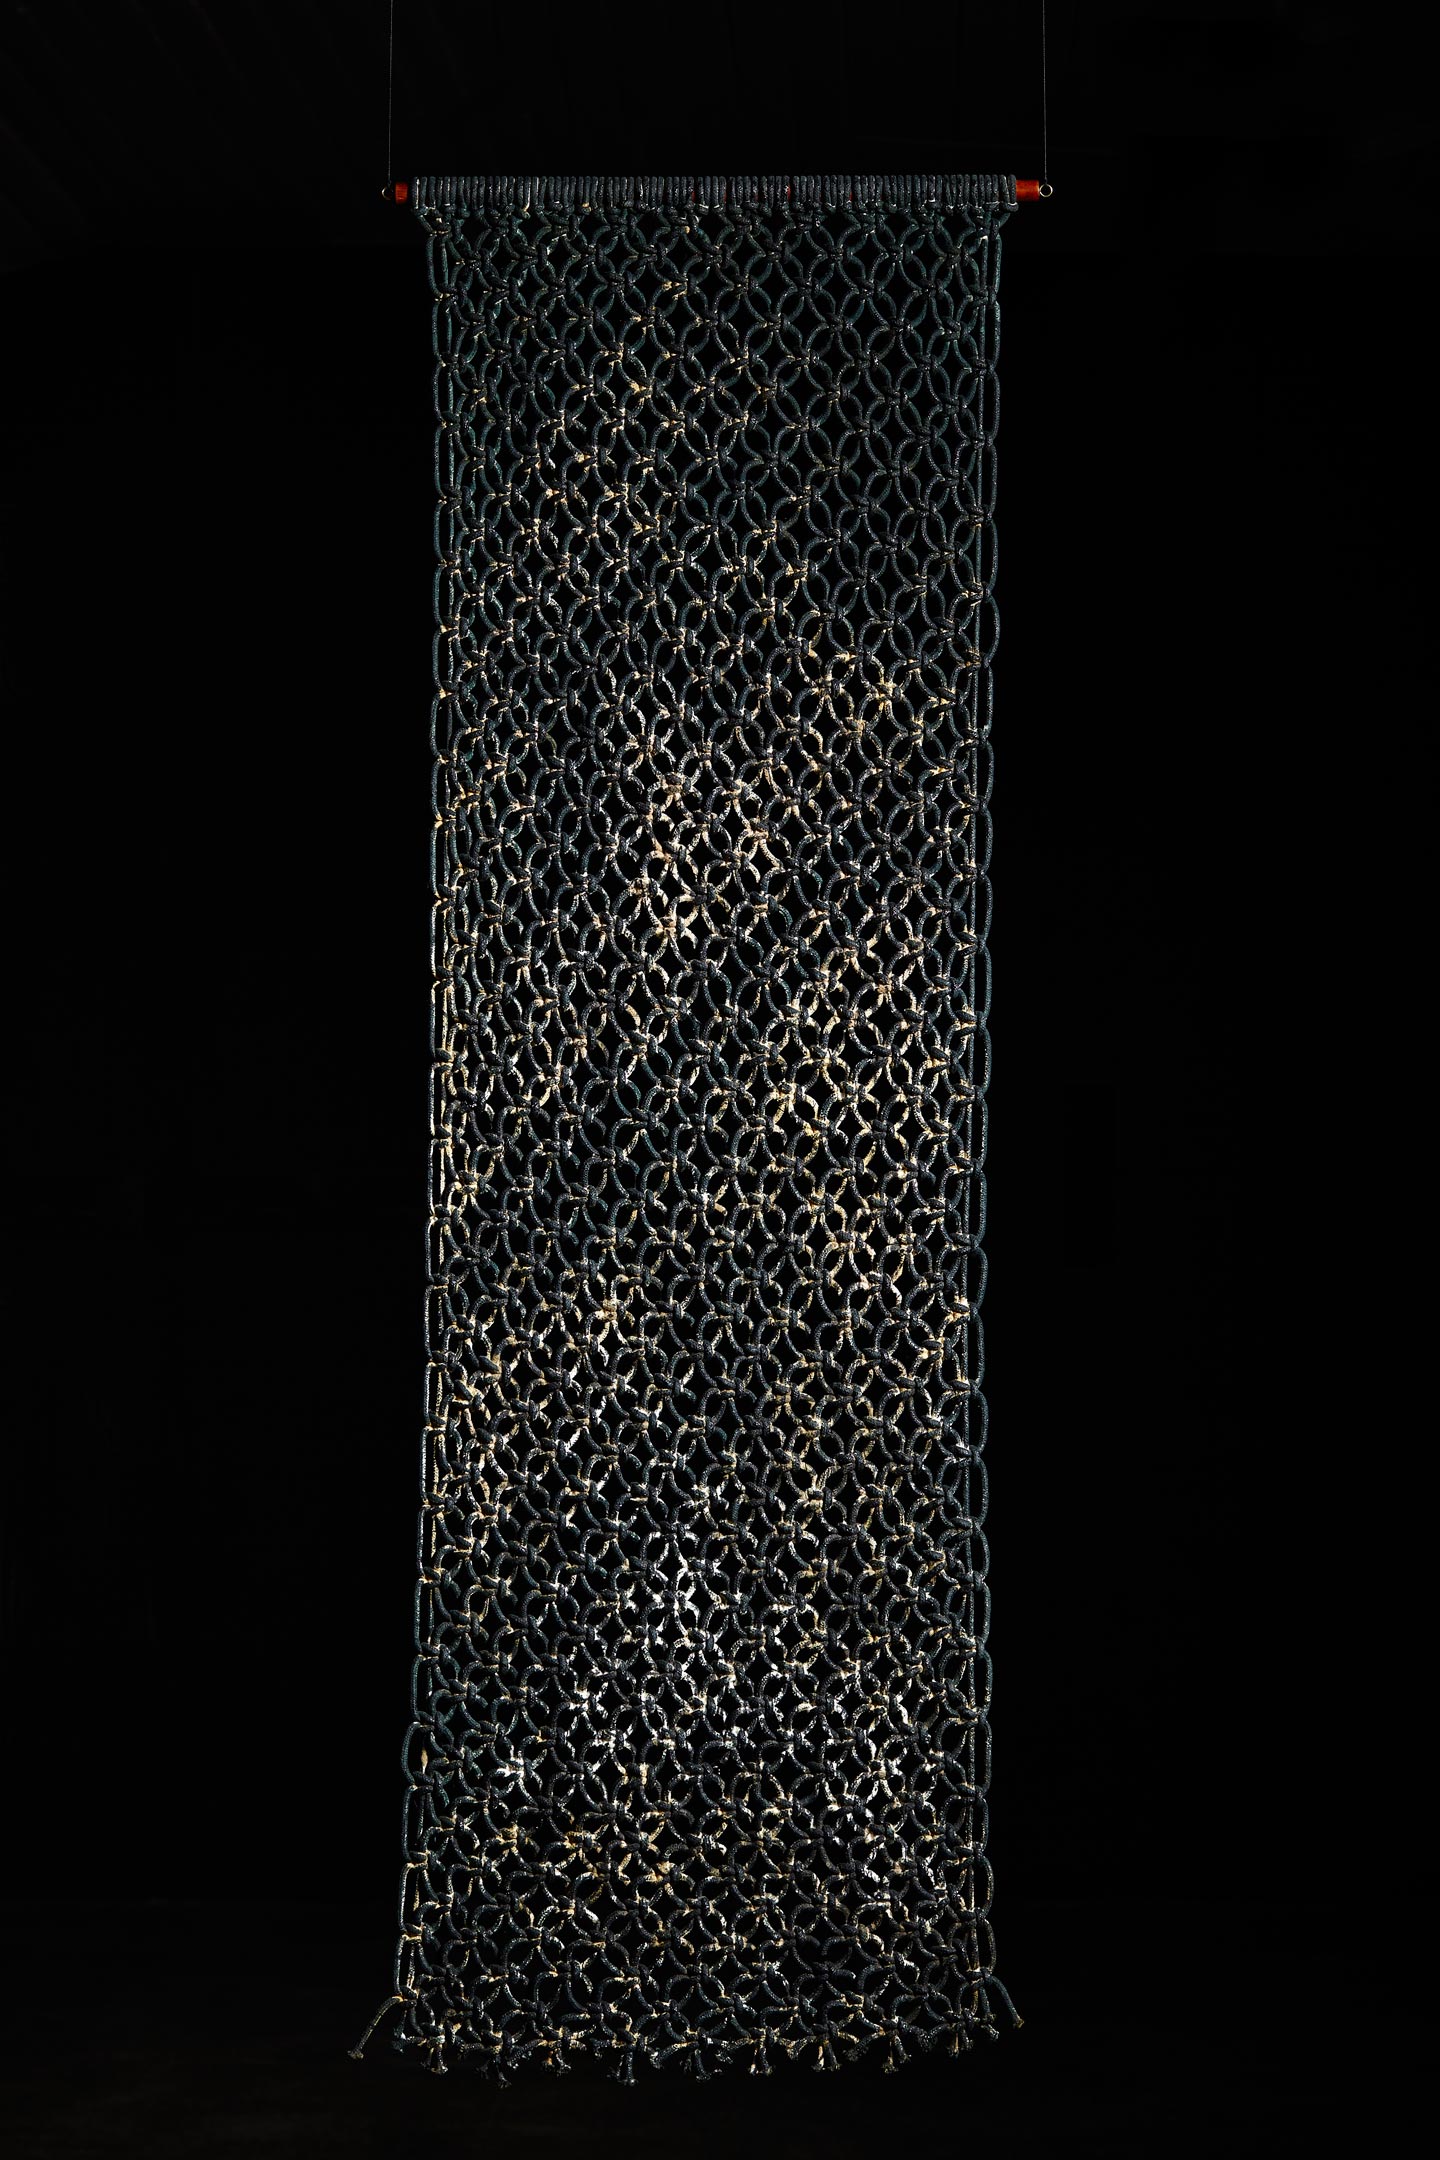 Pierre Fouché . Somewhere Else. 2014. Cotton rope, fabric dye, wood stain, glue size, enamel. 1620 x 570mm.